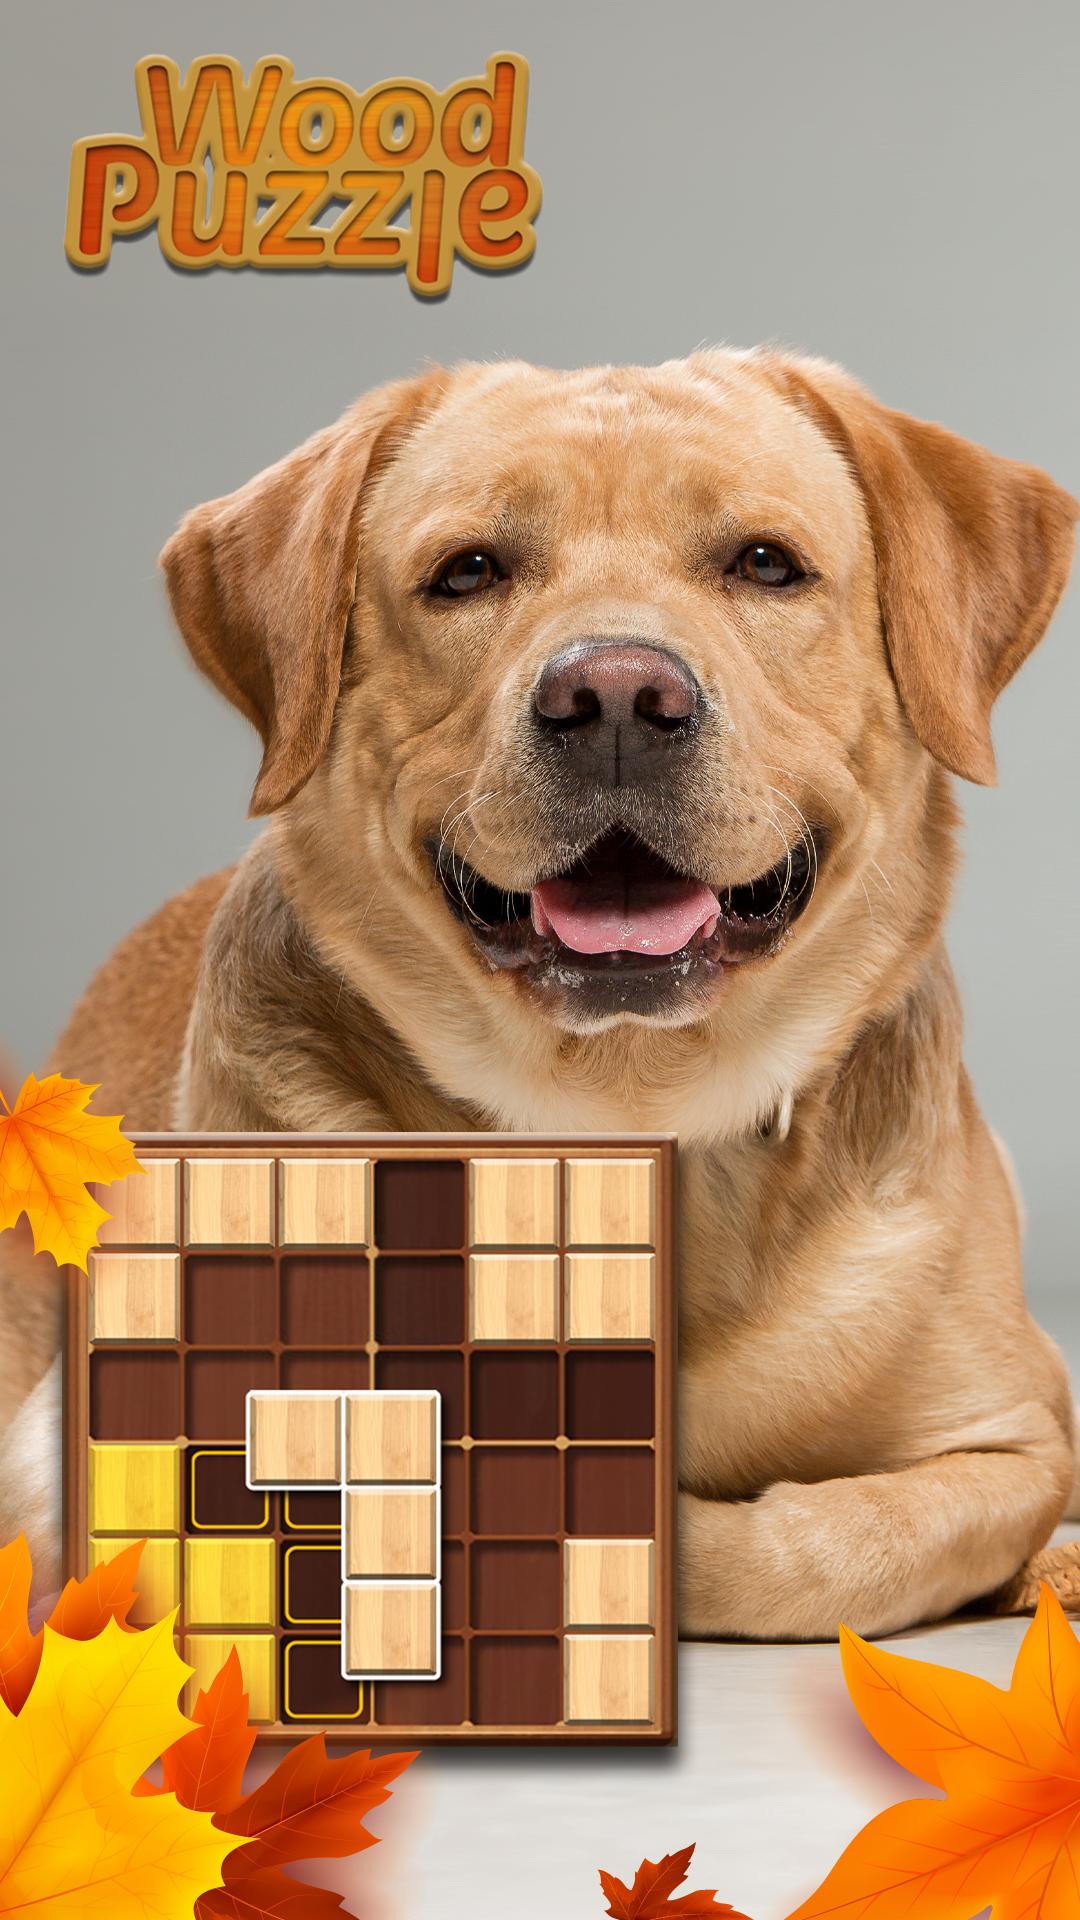 Wood Block Puzzle - Sudoku Block Game 1.0.6 Screenshot 15